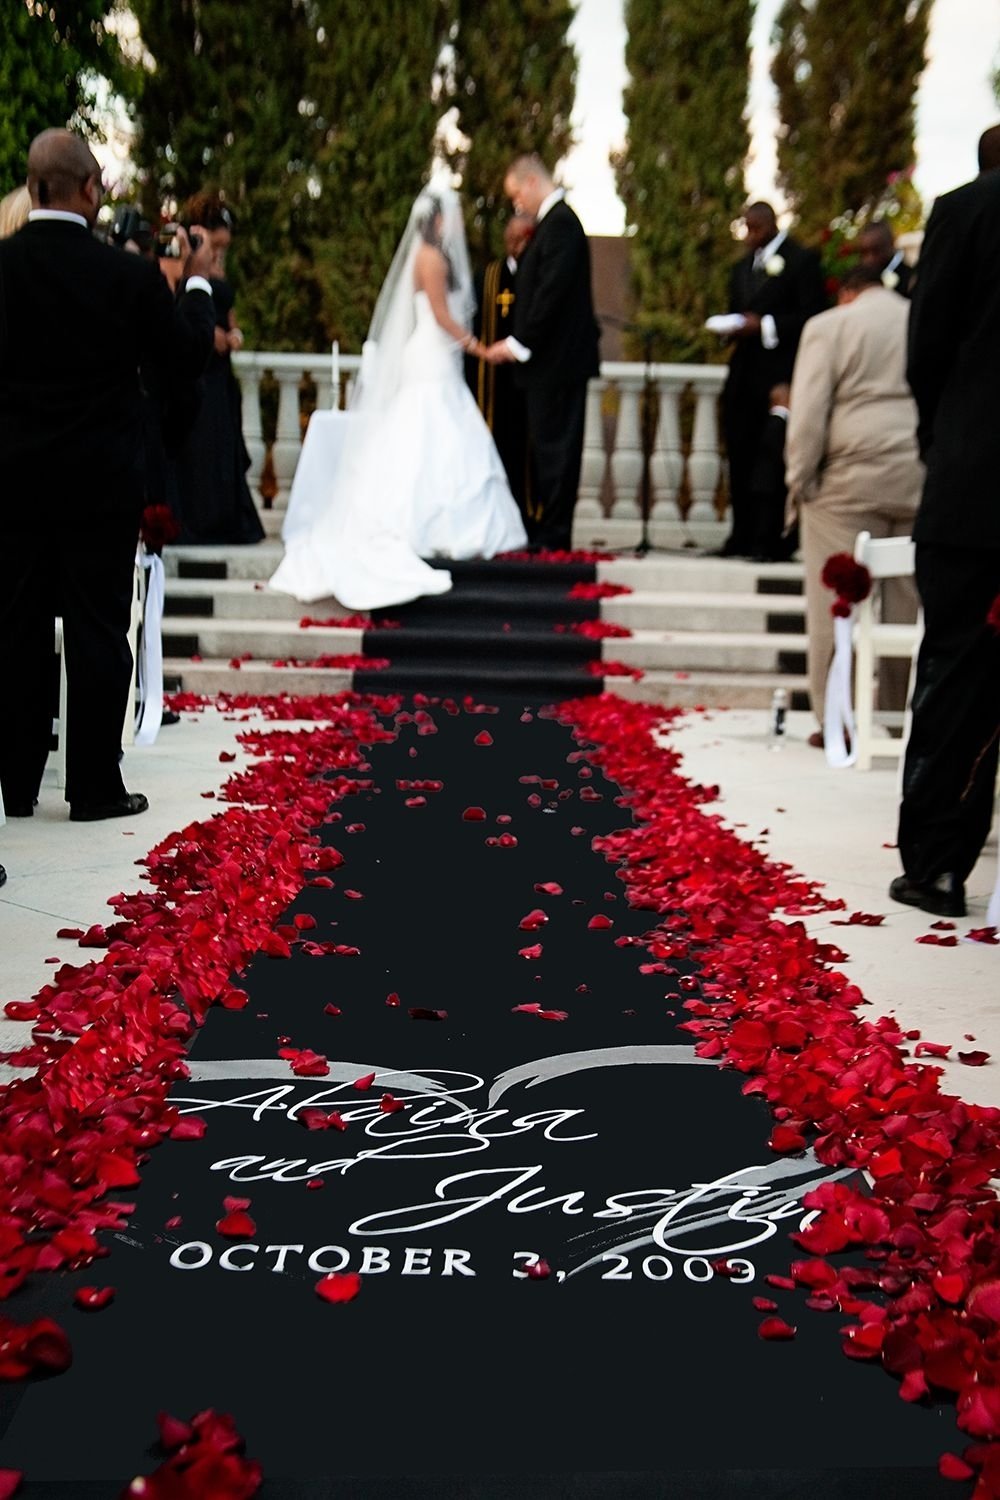 10 Nice Black White And Red Wedding Ideas black and red wedding ideas wedding ideas pinterest red 6 2022